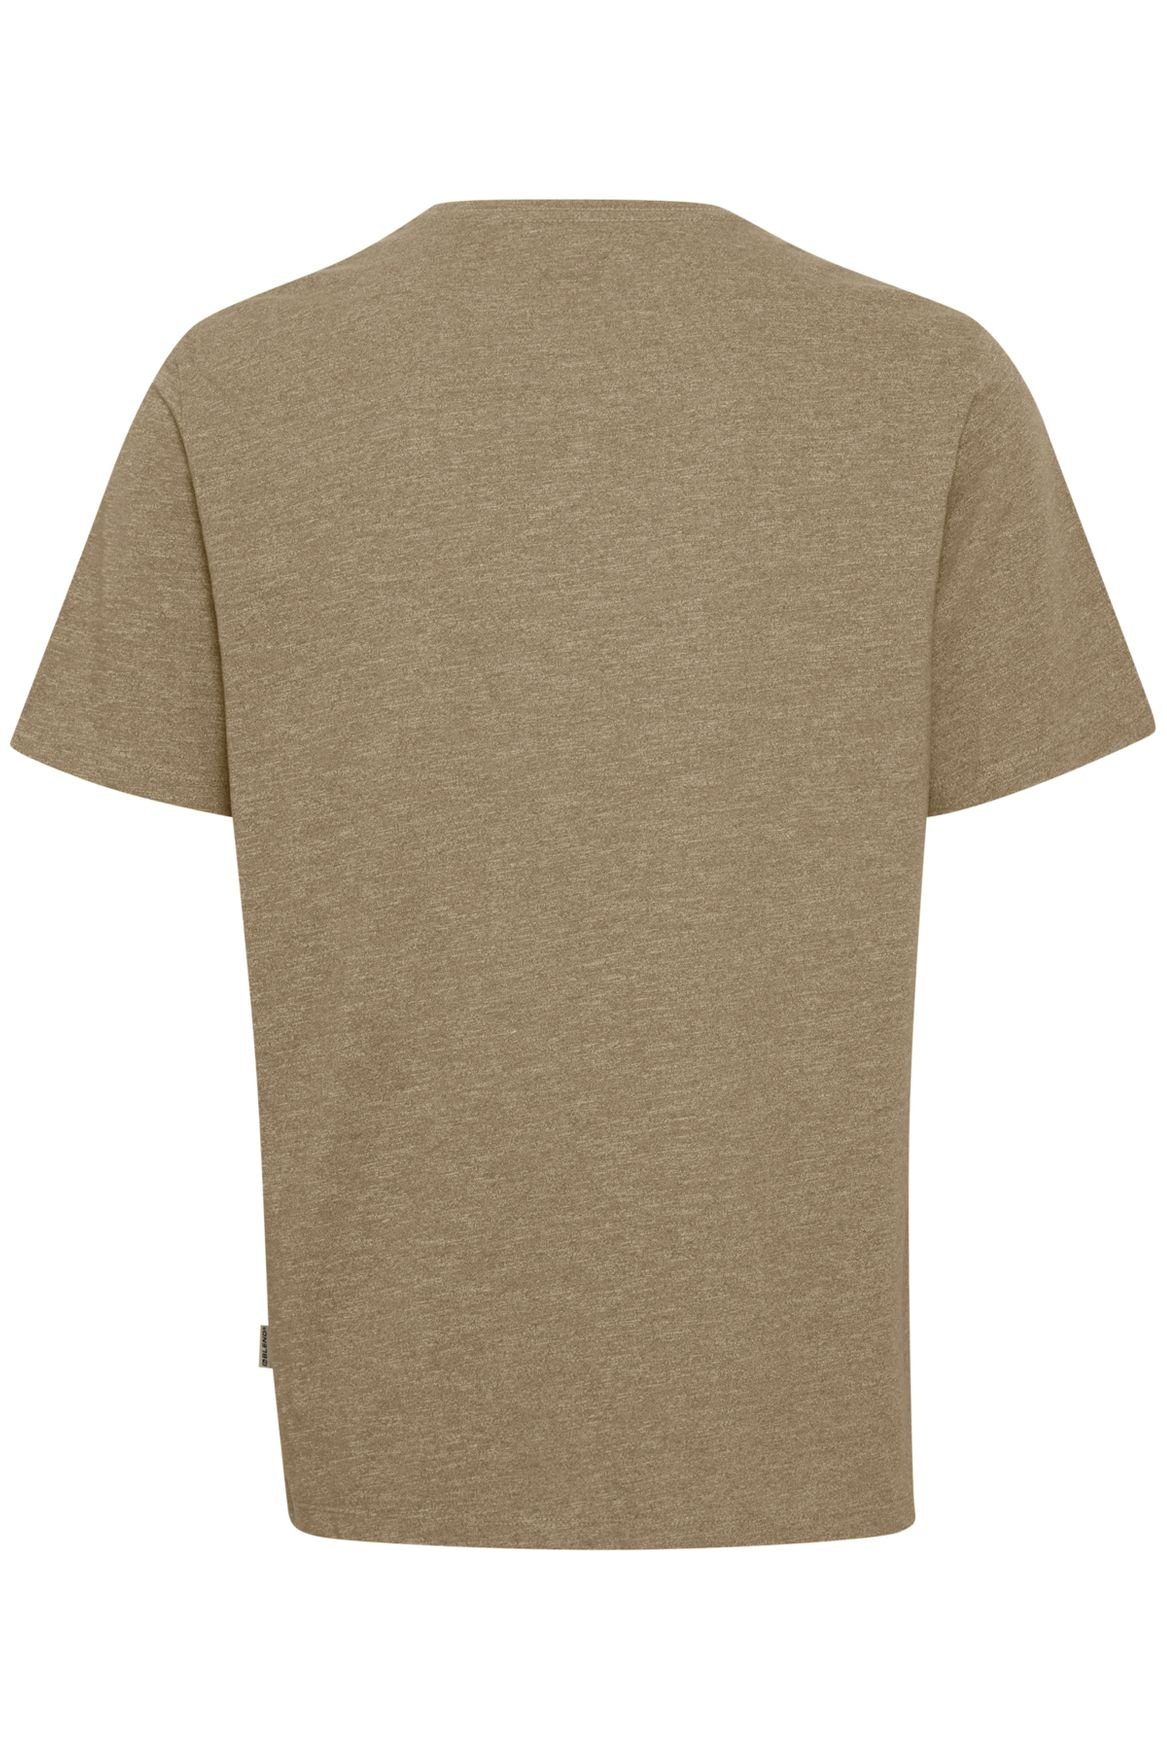 Stretch Shirt T-Shirt T-Shirt Beige Rundhals in 5030 Kurzarm Blend BHWilton